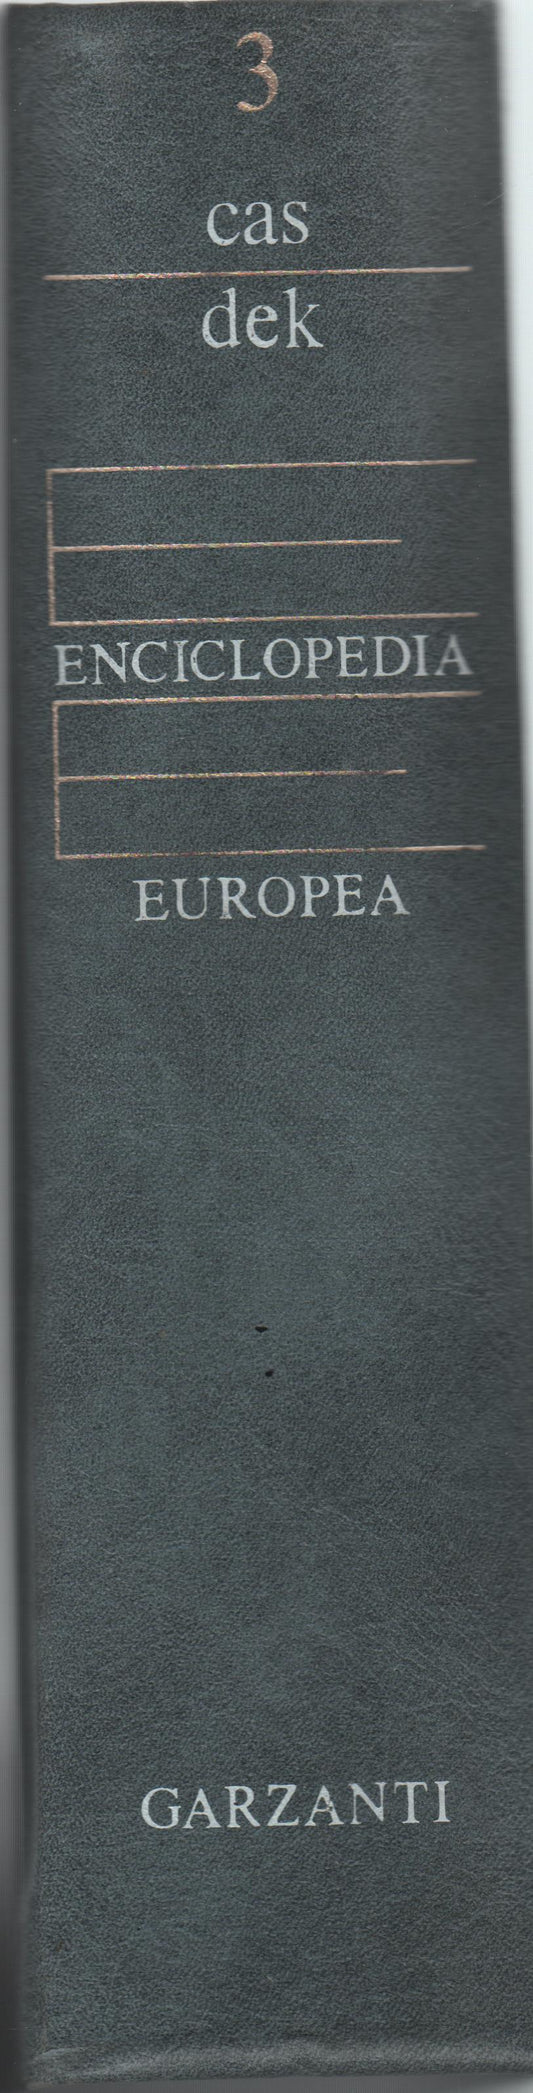 Enciclopedia Europea - Volume 3 (cas - dek)